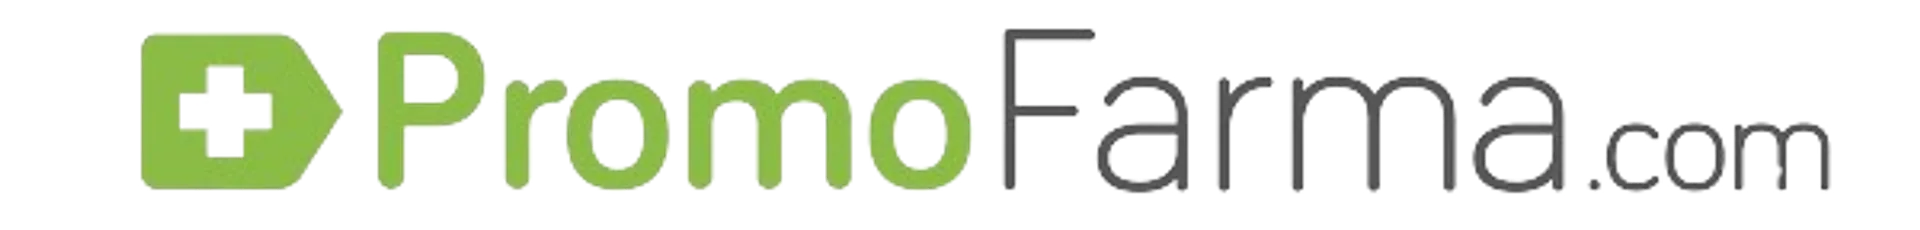 PROFARMA logo de catálogo